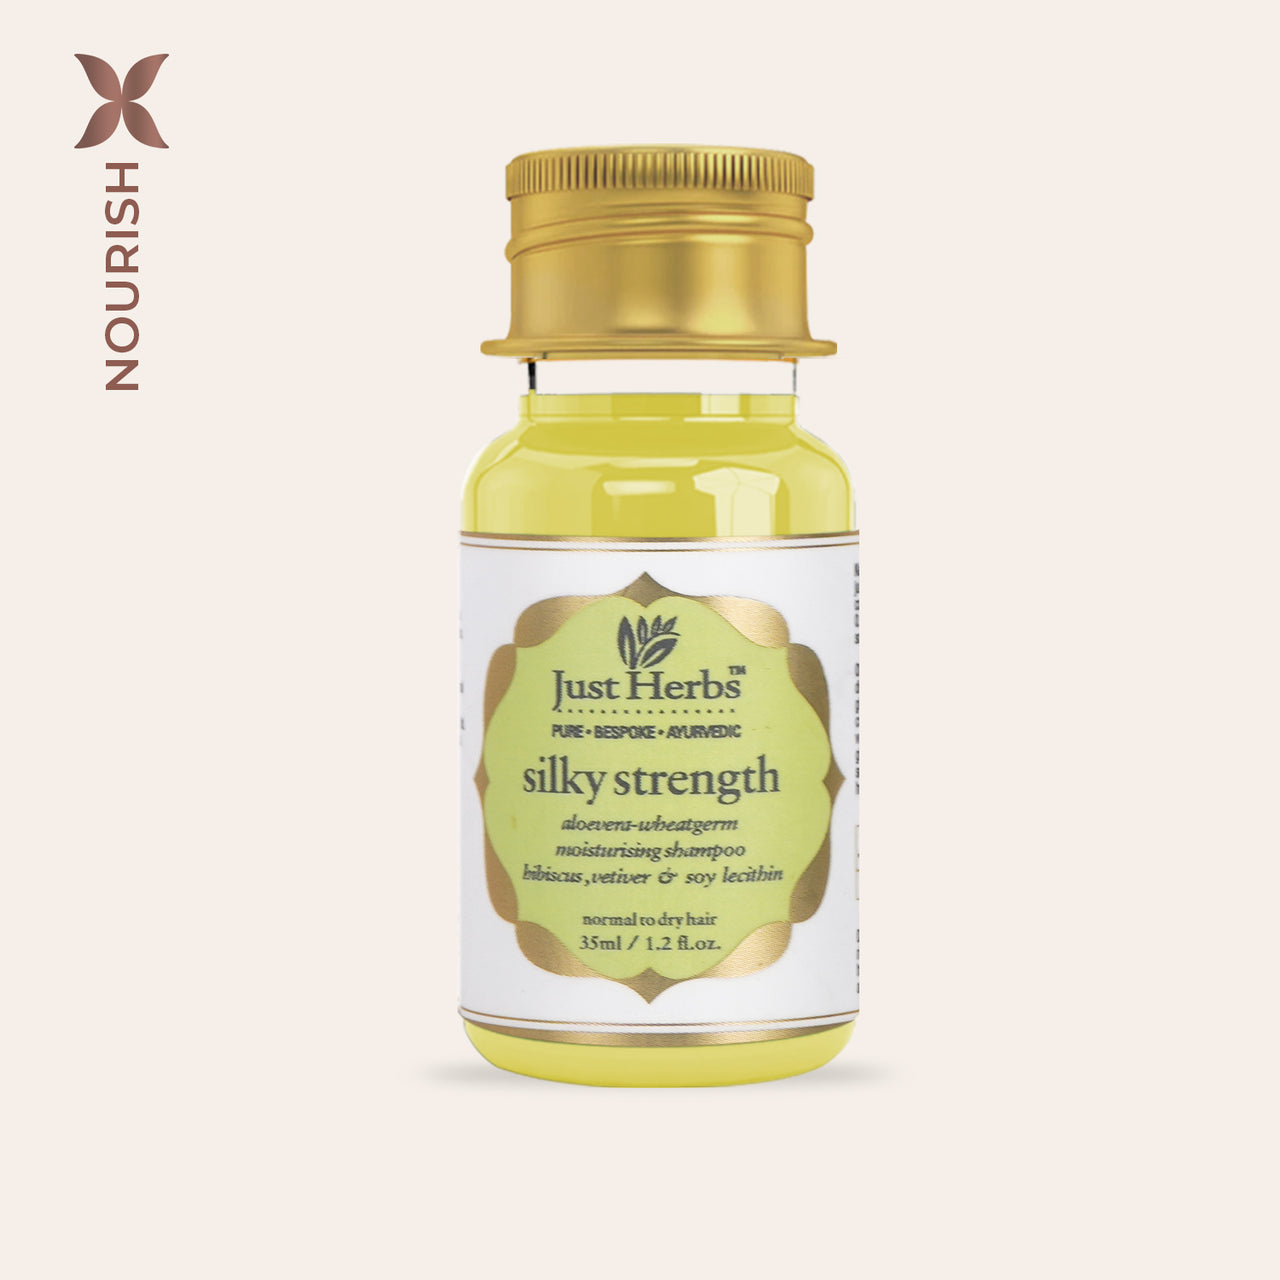 Silky Strength Aloevera-Wheatgerm Moisturising Shampoo 35ml